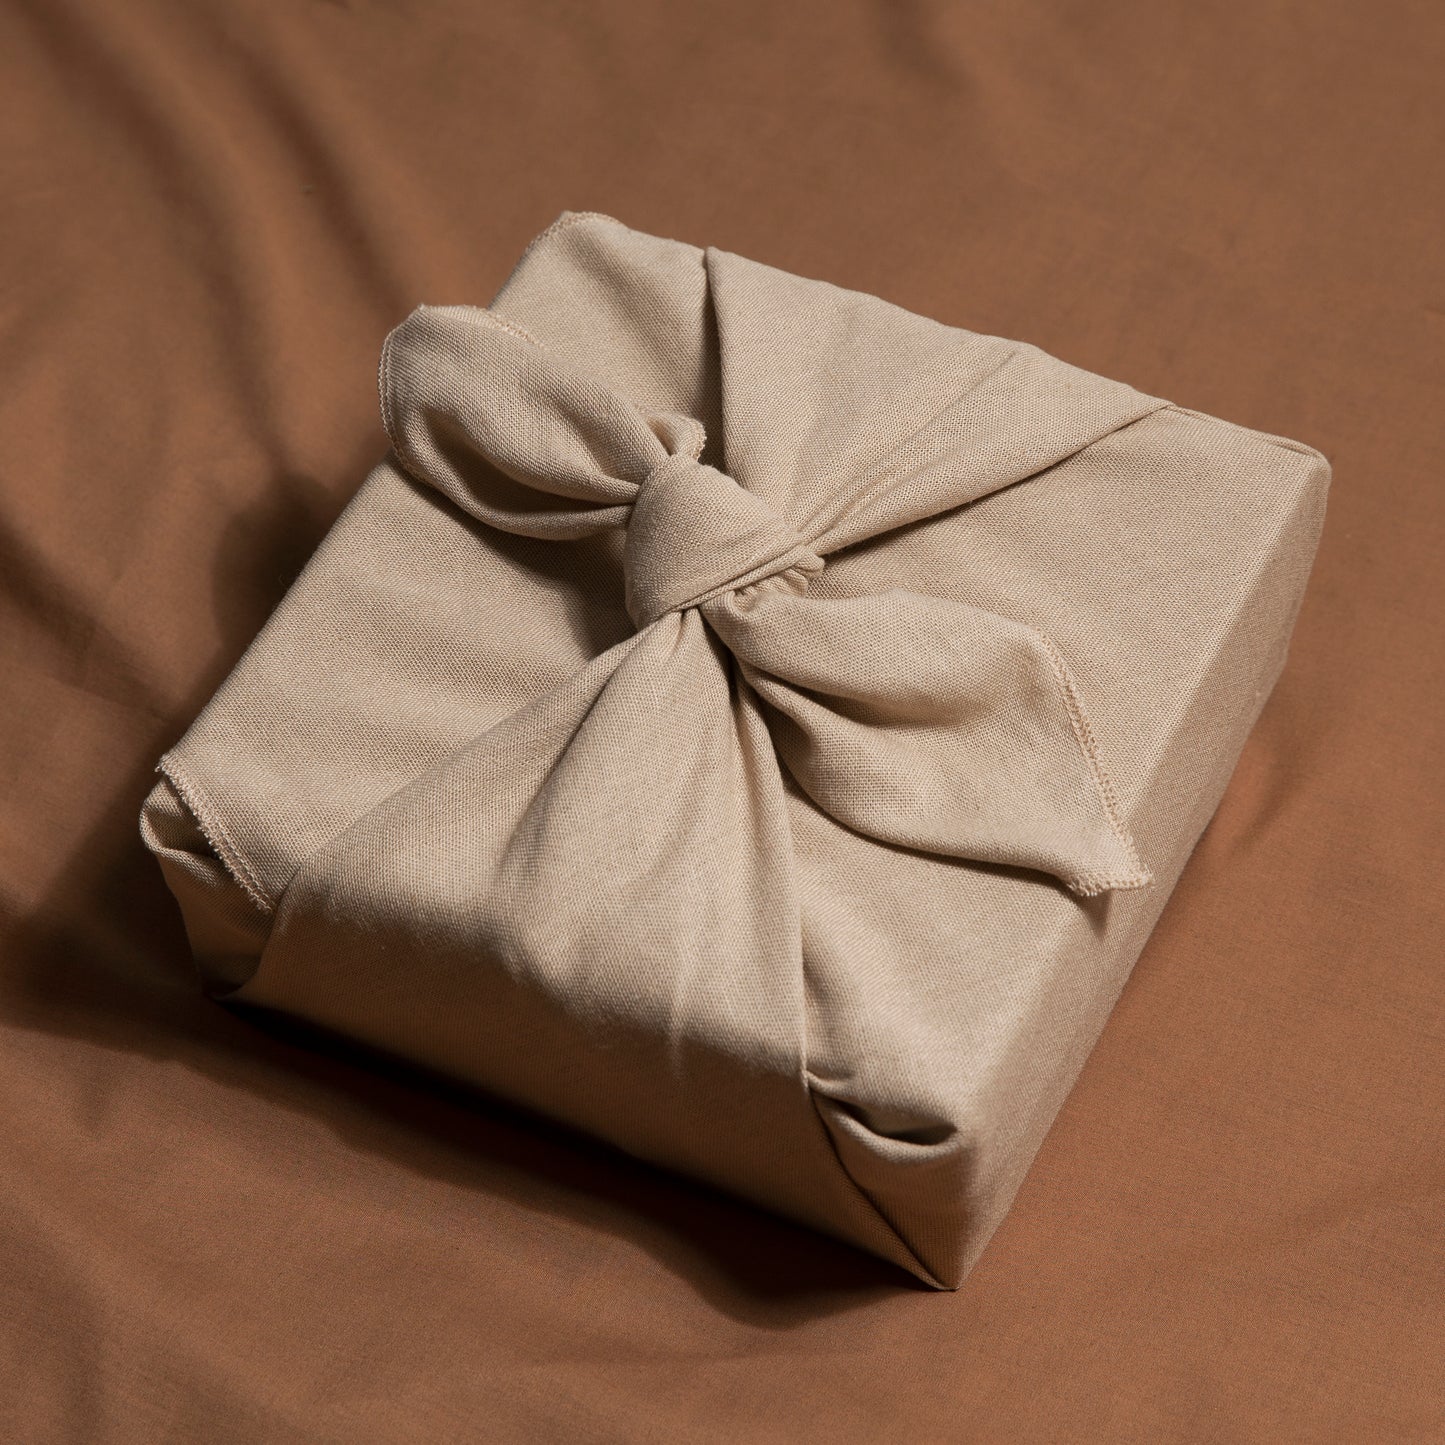 Furoshiki Gift Wrap